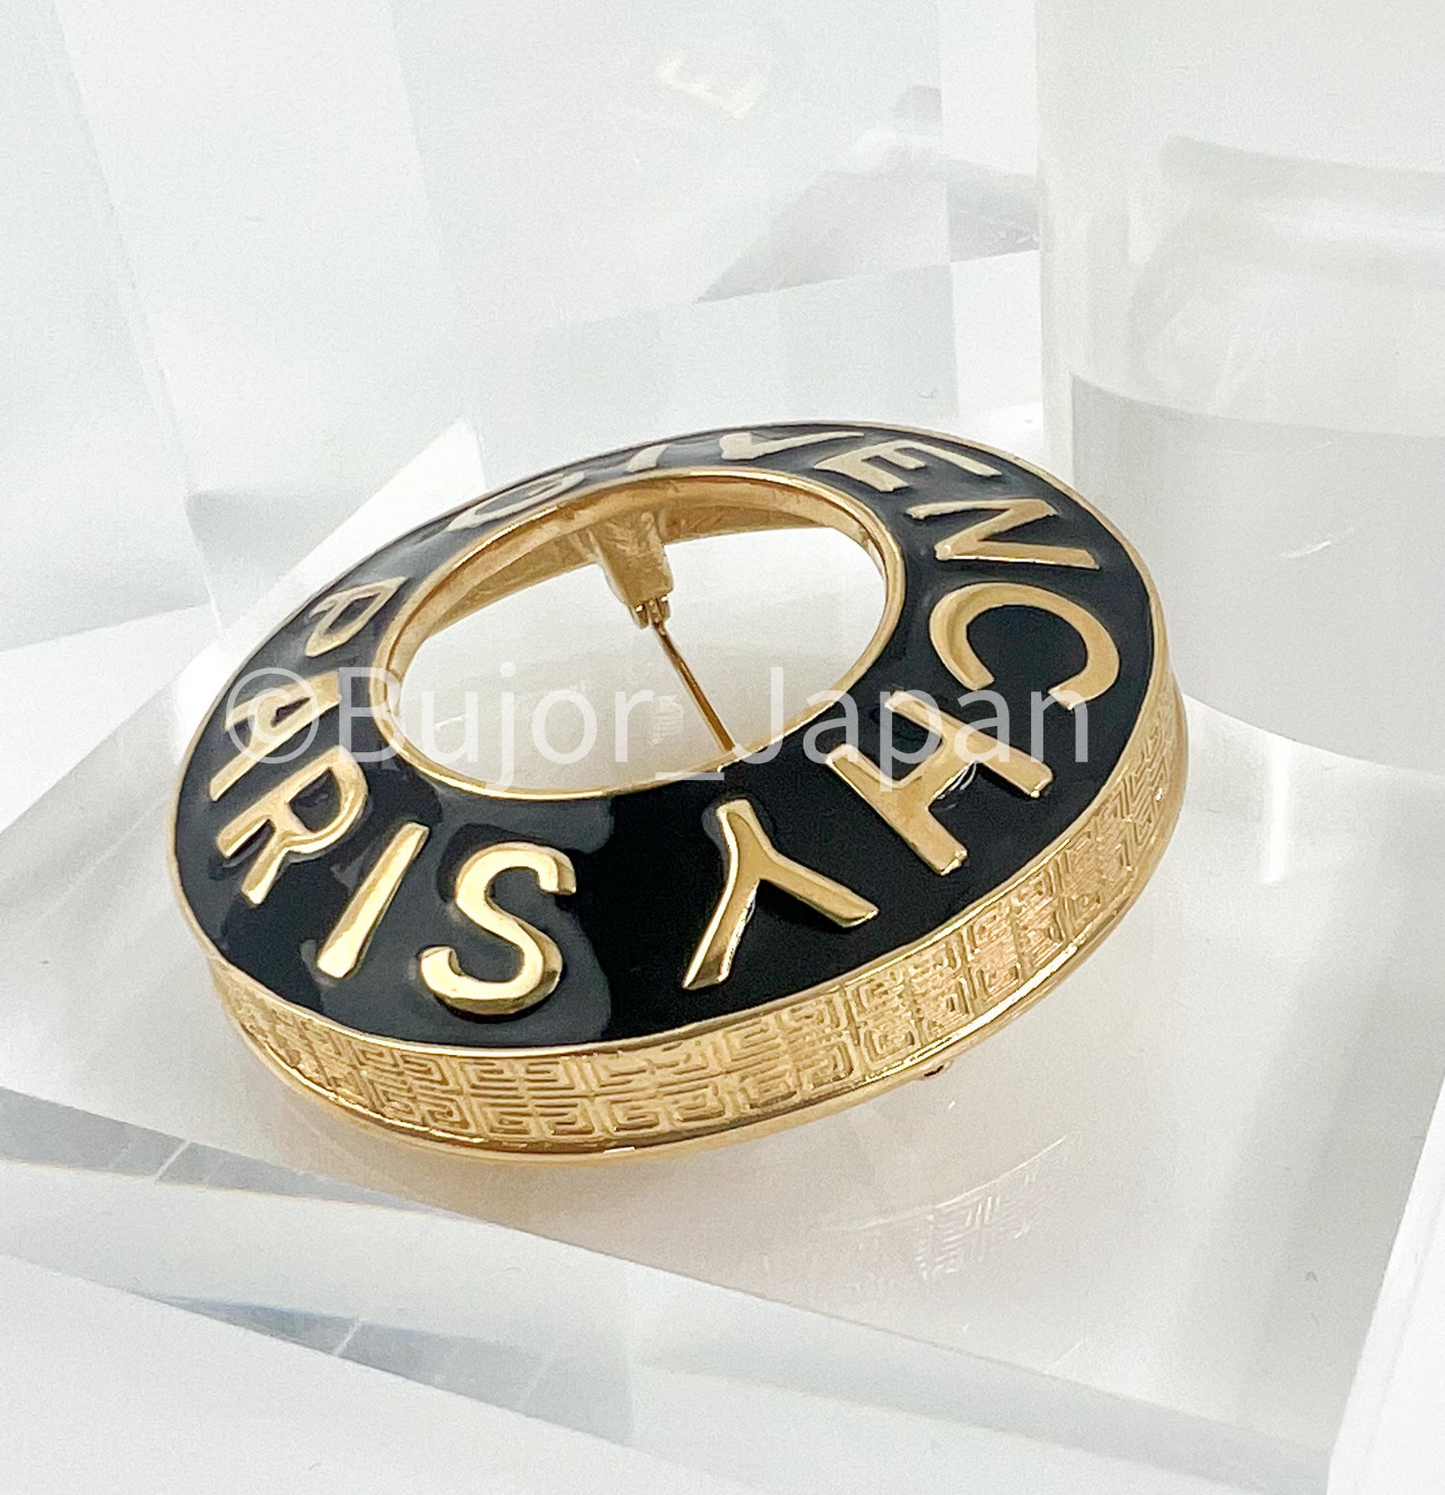 【SOLD OUT】Givenchy Paris Gold Tone Logo Brooch Pin Black Enamel Vintage Unisex